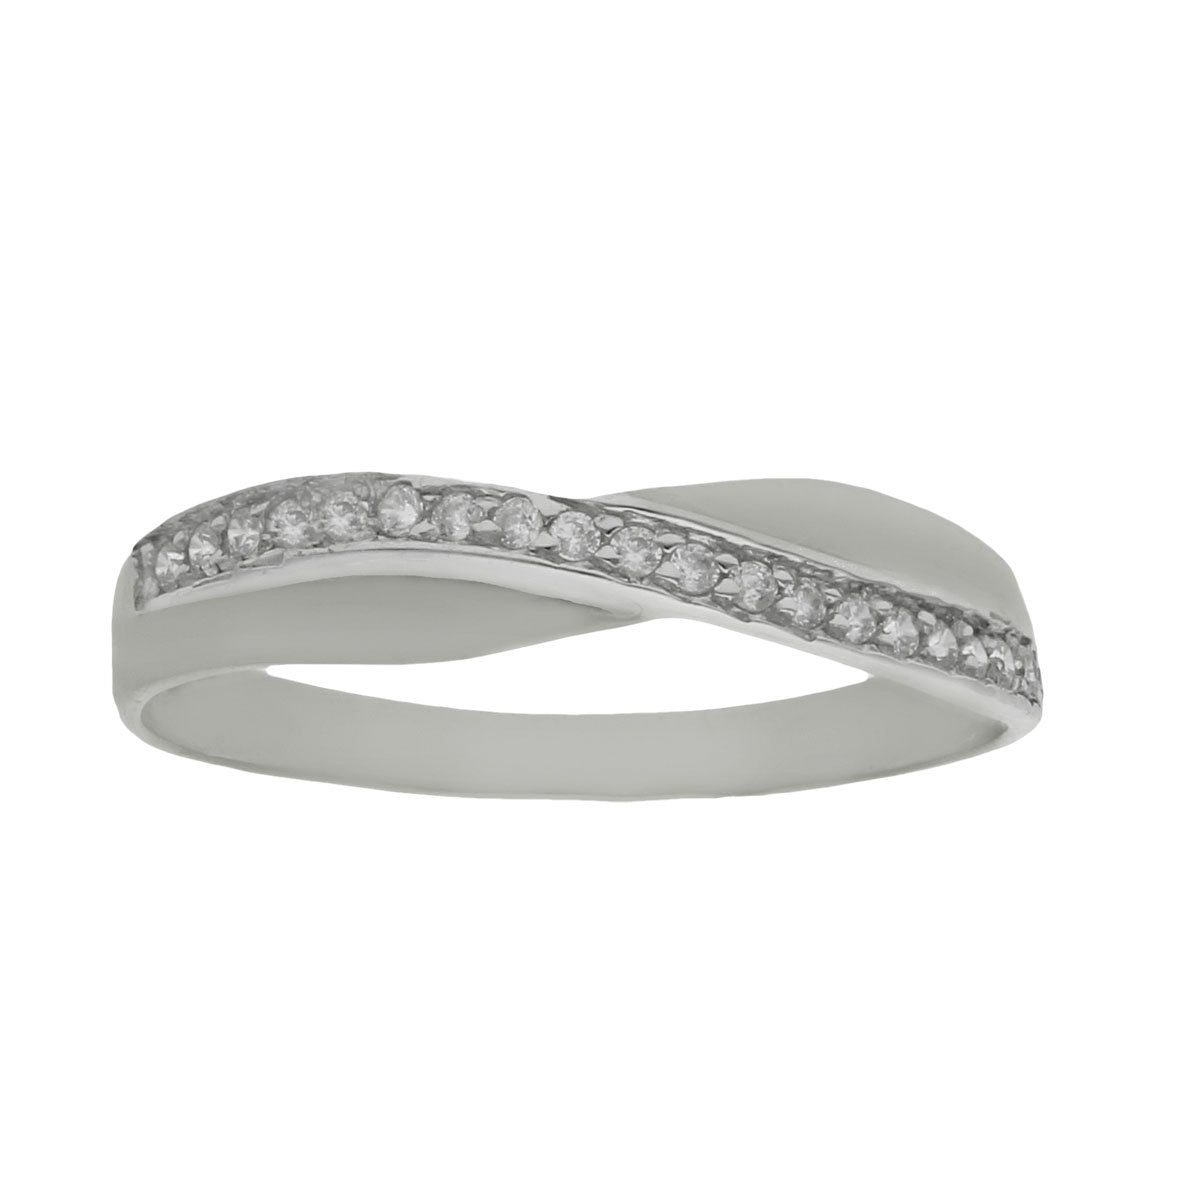 Comprar anillo de compromiso de oro blanco y diamantes para mujer online precios baratos, comprar anillo de compromiso de oro blancon y diamantes en Mallorca - Joyeria Zeller